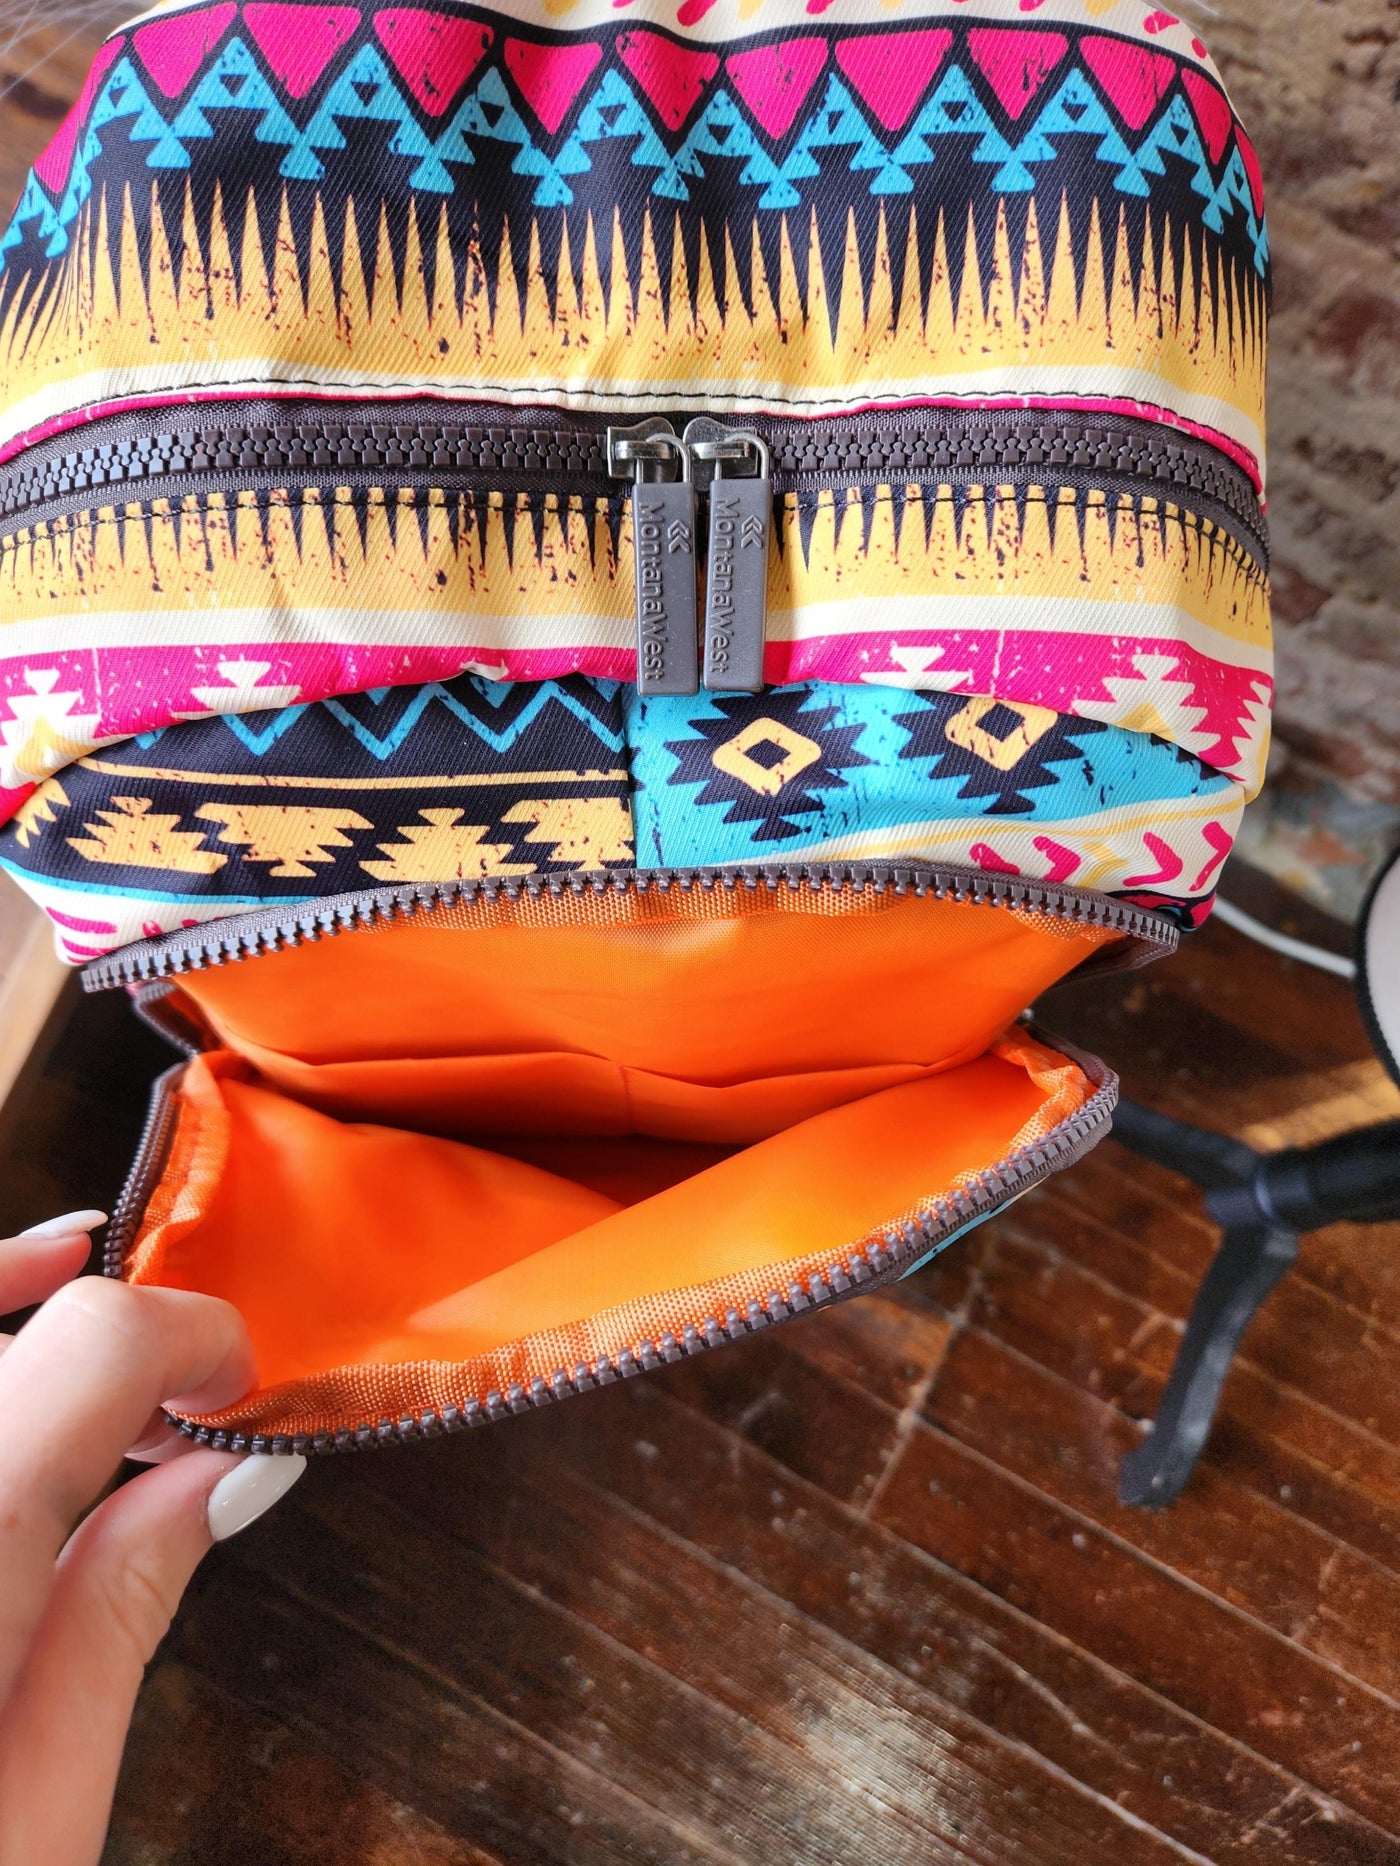 Skeeter Brightly Colored Aztec Backpack